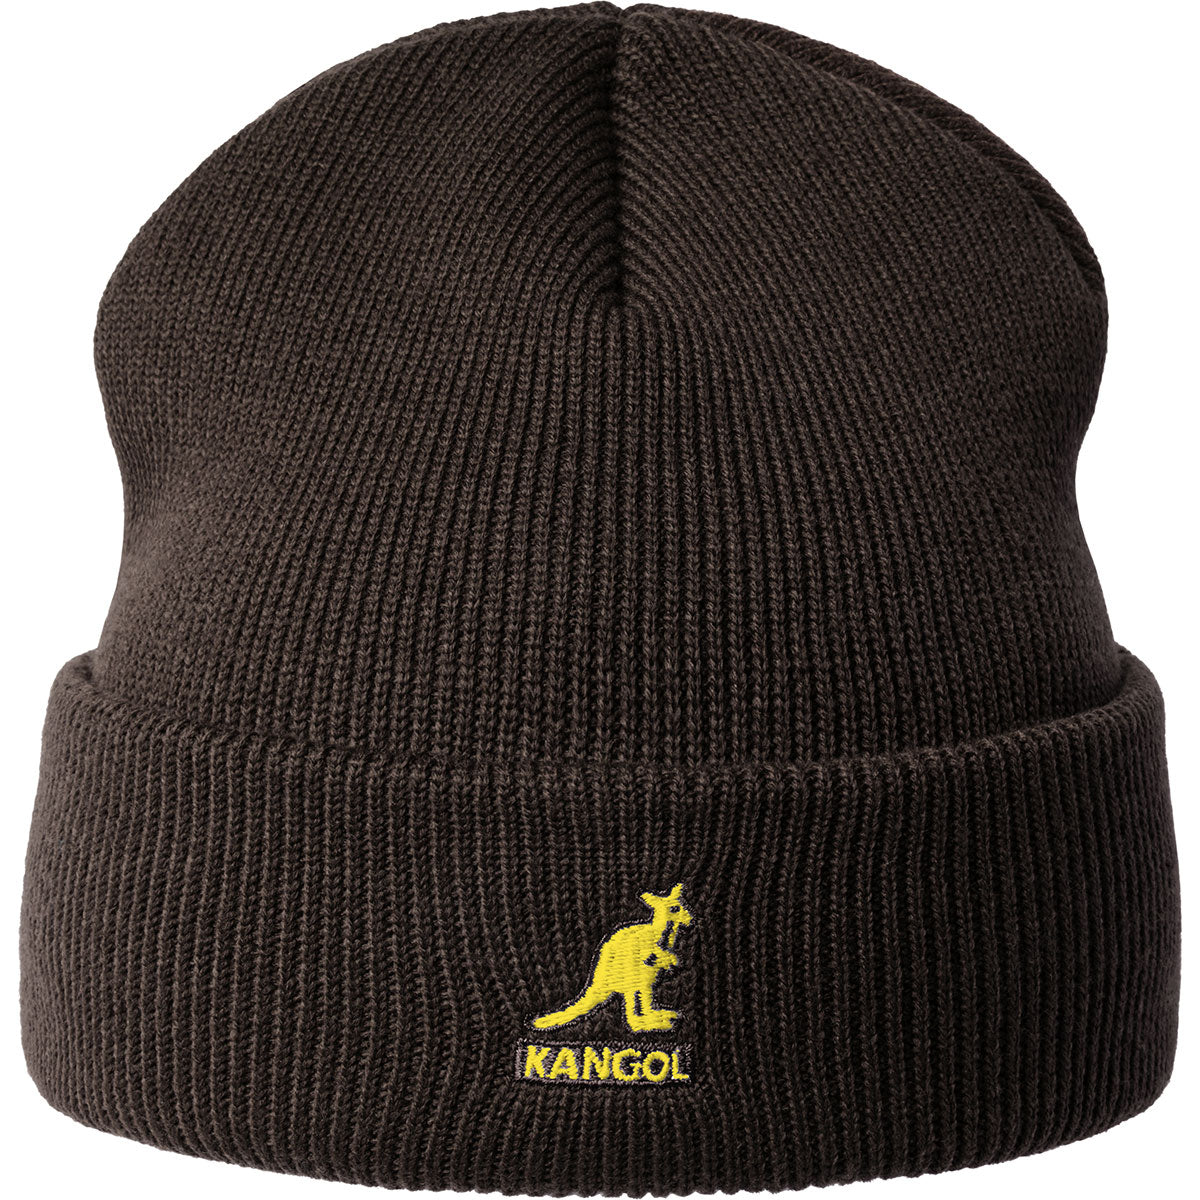 Kangol Acrylic Cuff Pull On Black/Gold - Cappello Lifestyle - Neverland Firenze